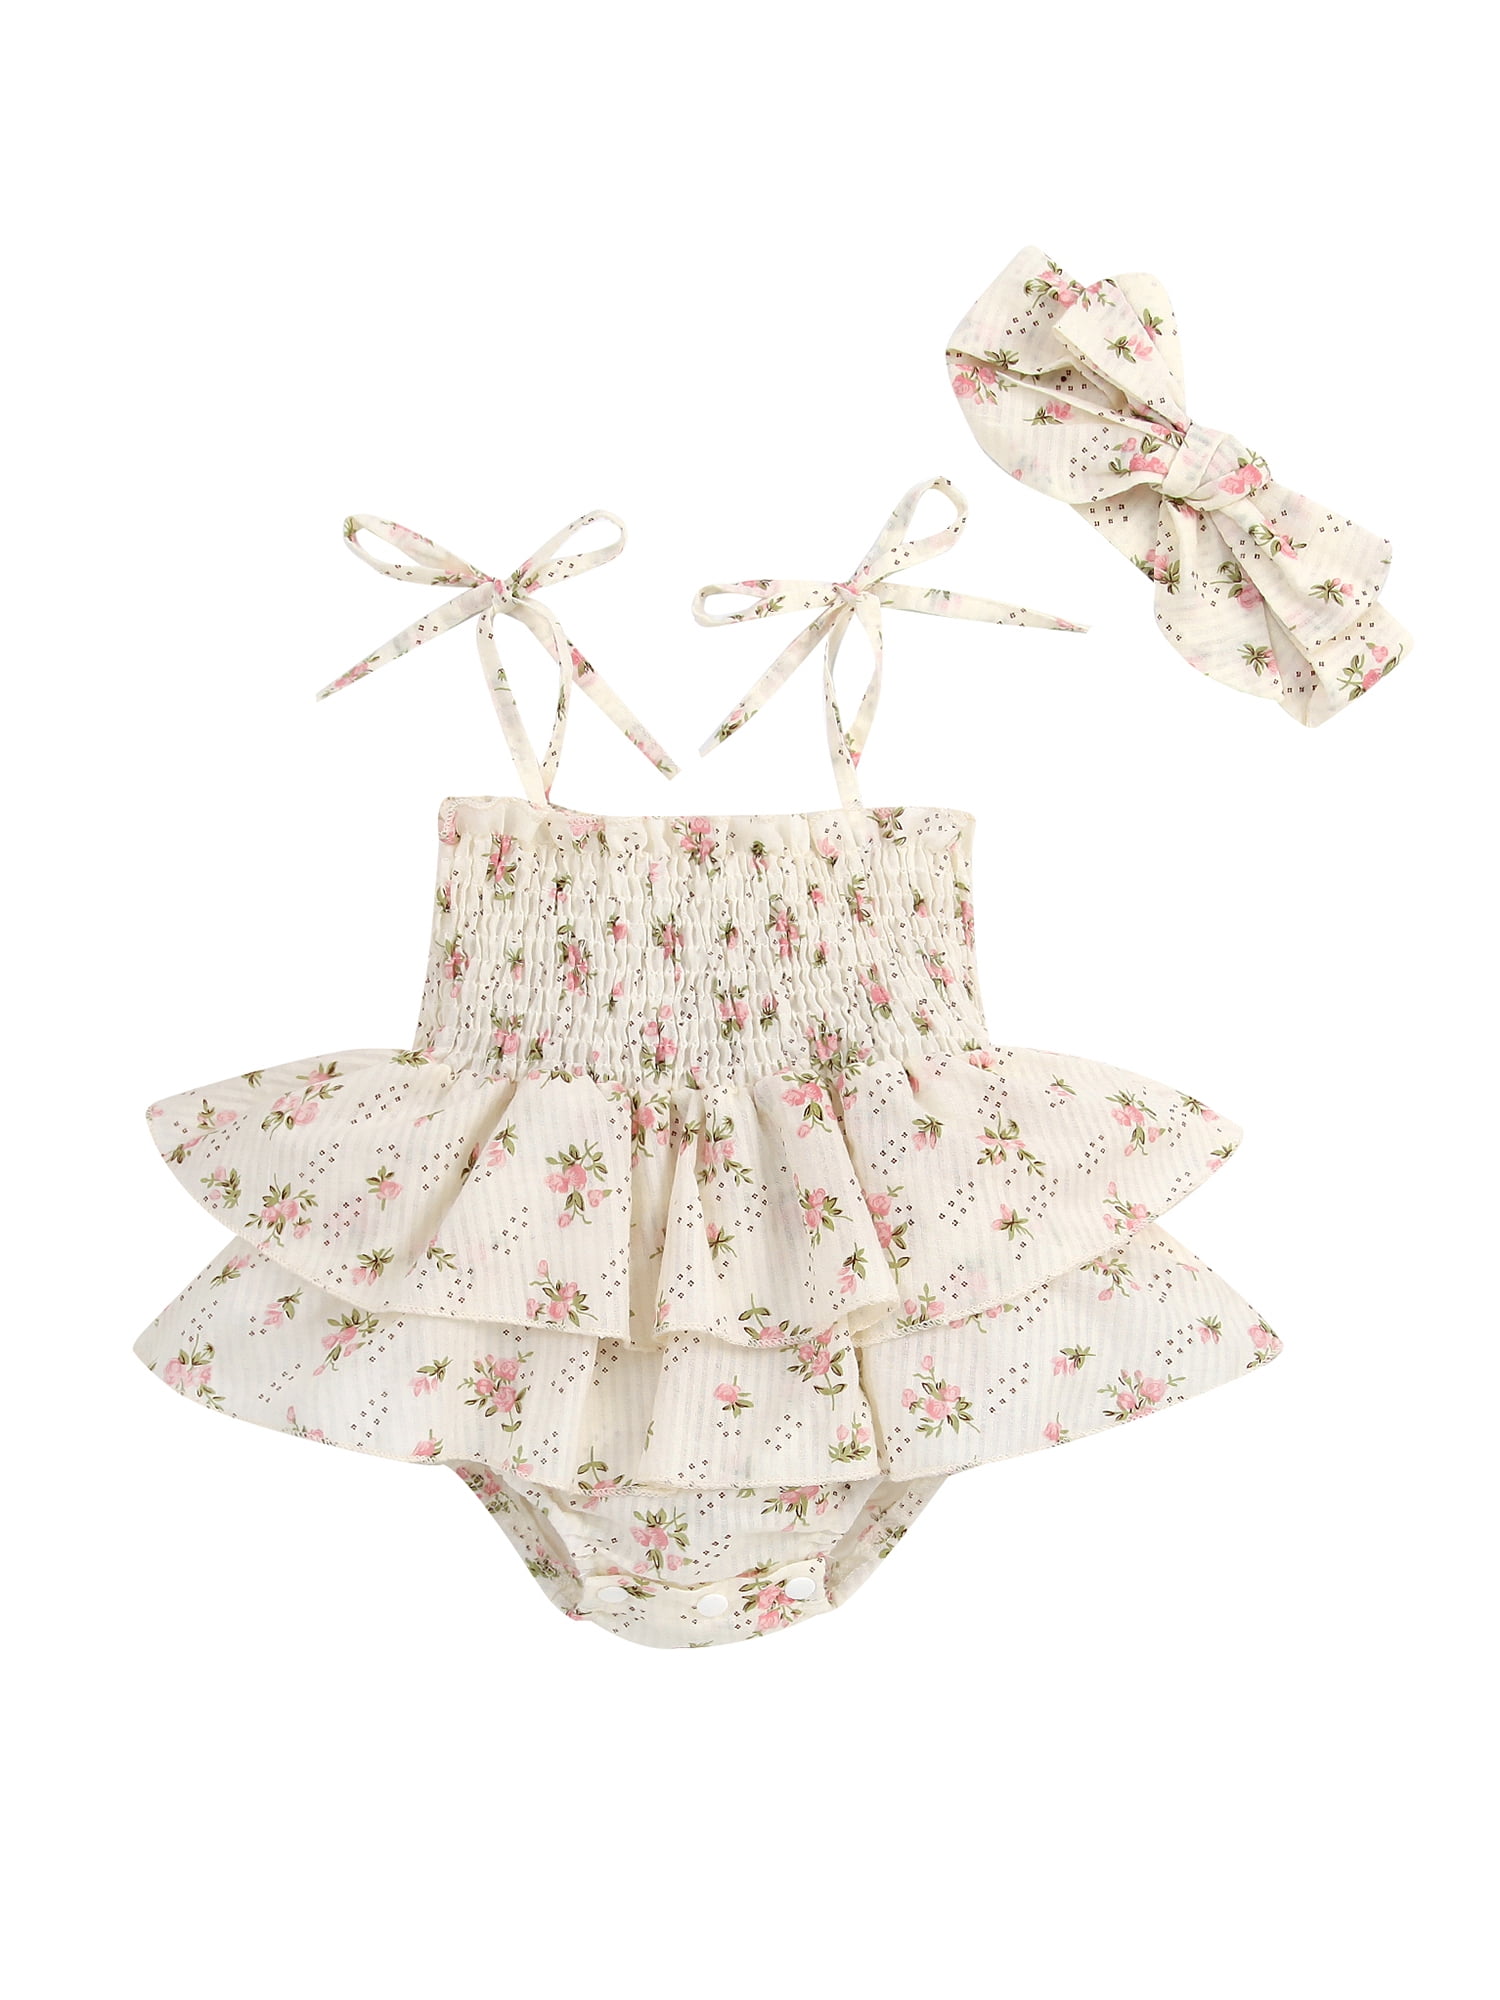 Caitzr Newborn Baby Girl Summer Romper Dress Floral Print Elasticated ...